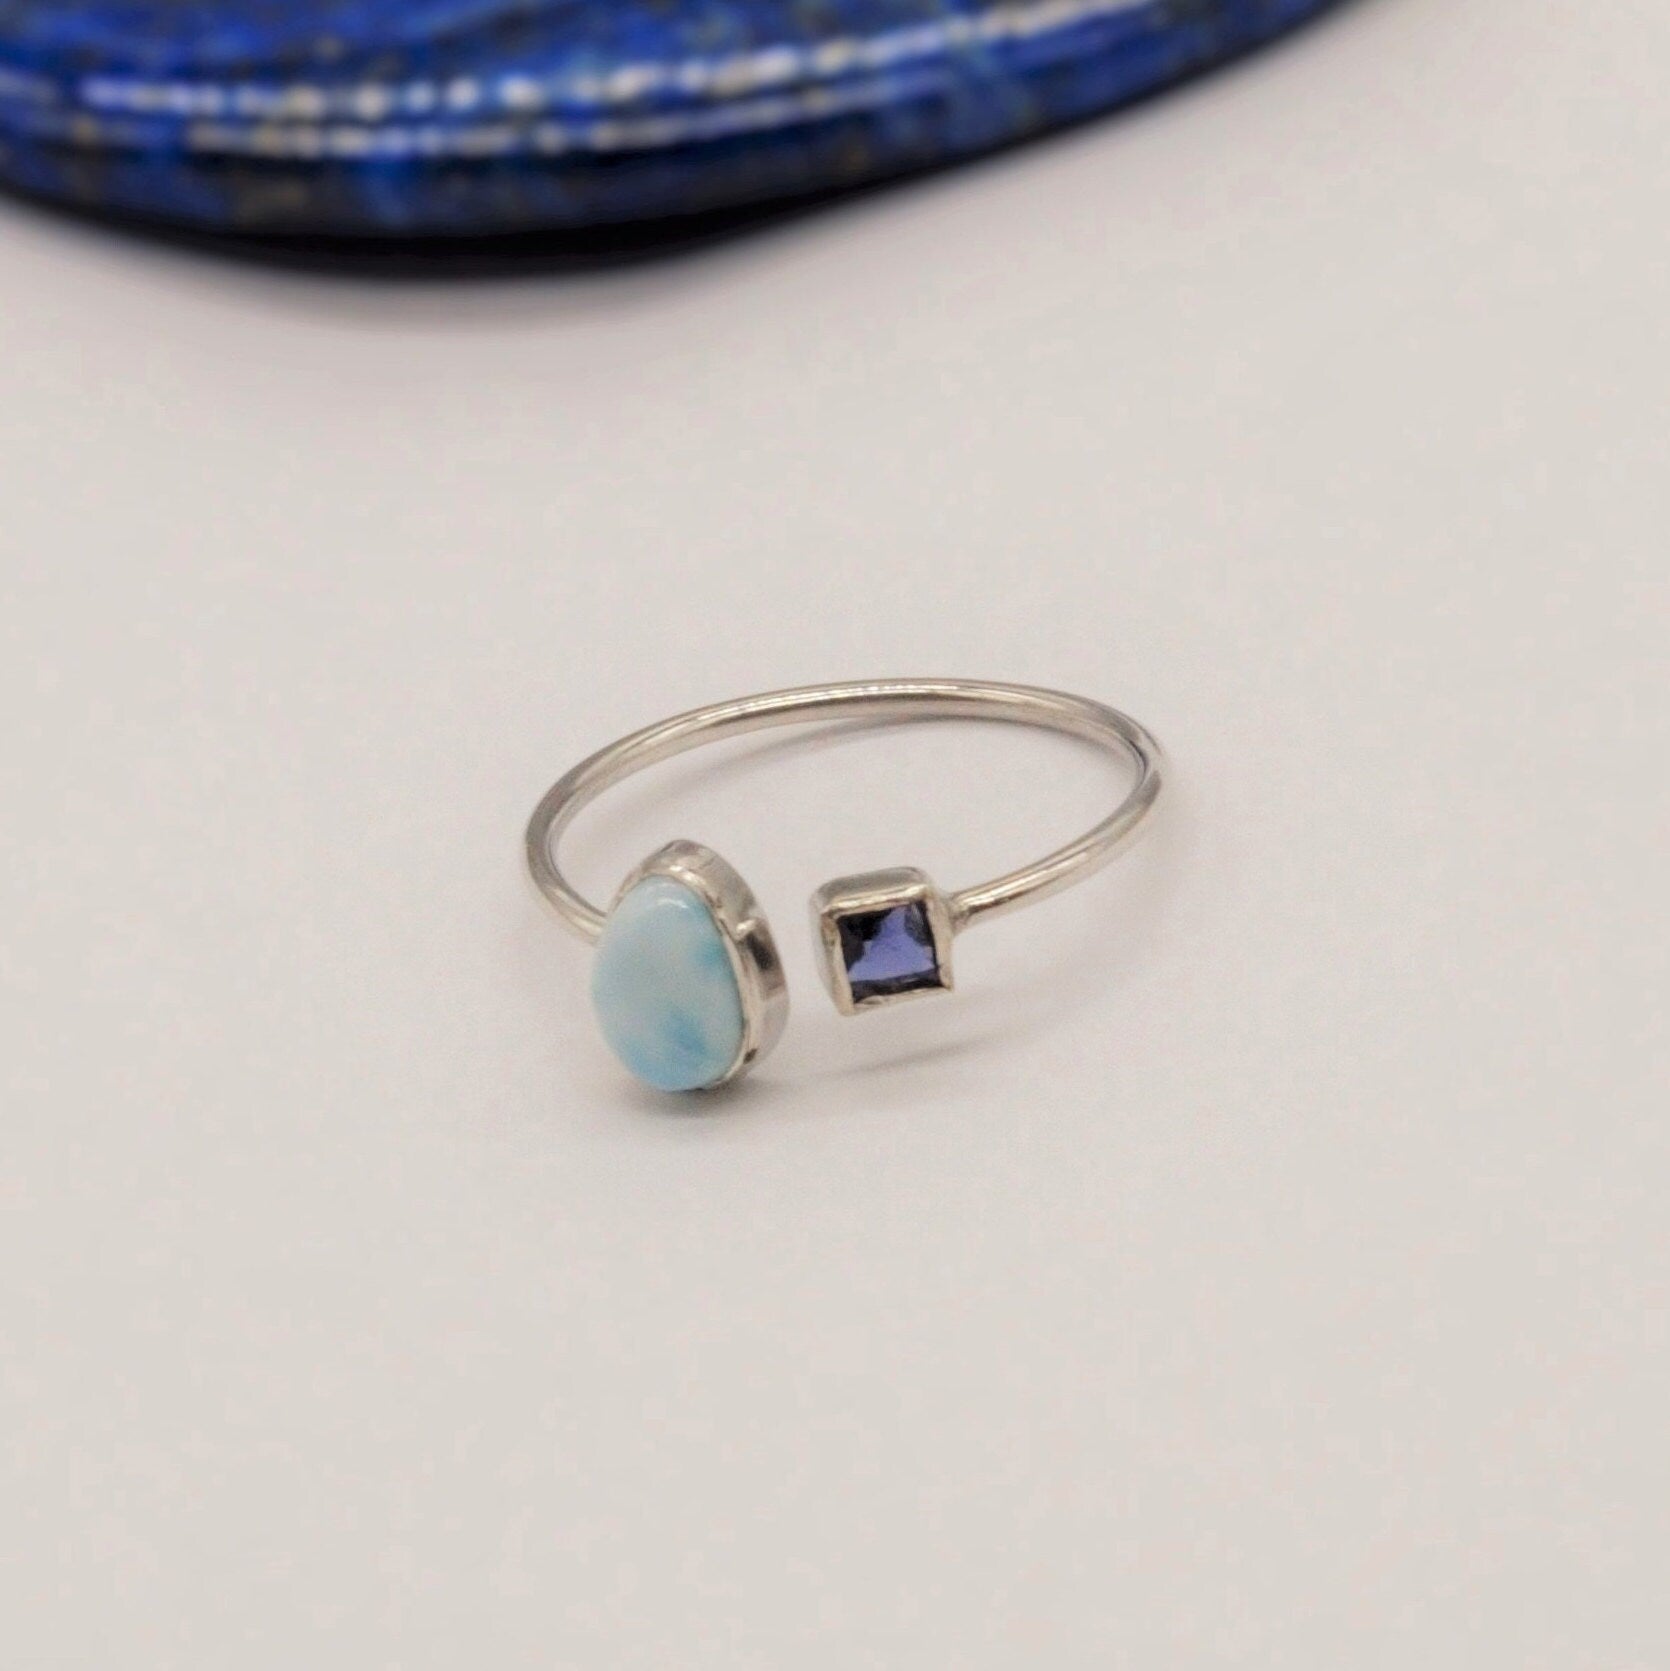 Blue Larimar, Iolite Sterling Silver Ring, Dainty Ring, Open Ring, Gemstone Ring, Rings for Women, Birthday Gift For Her, Mom Gift